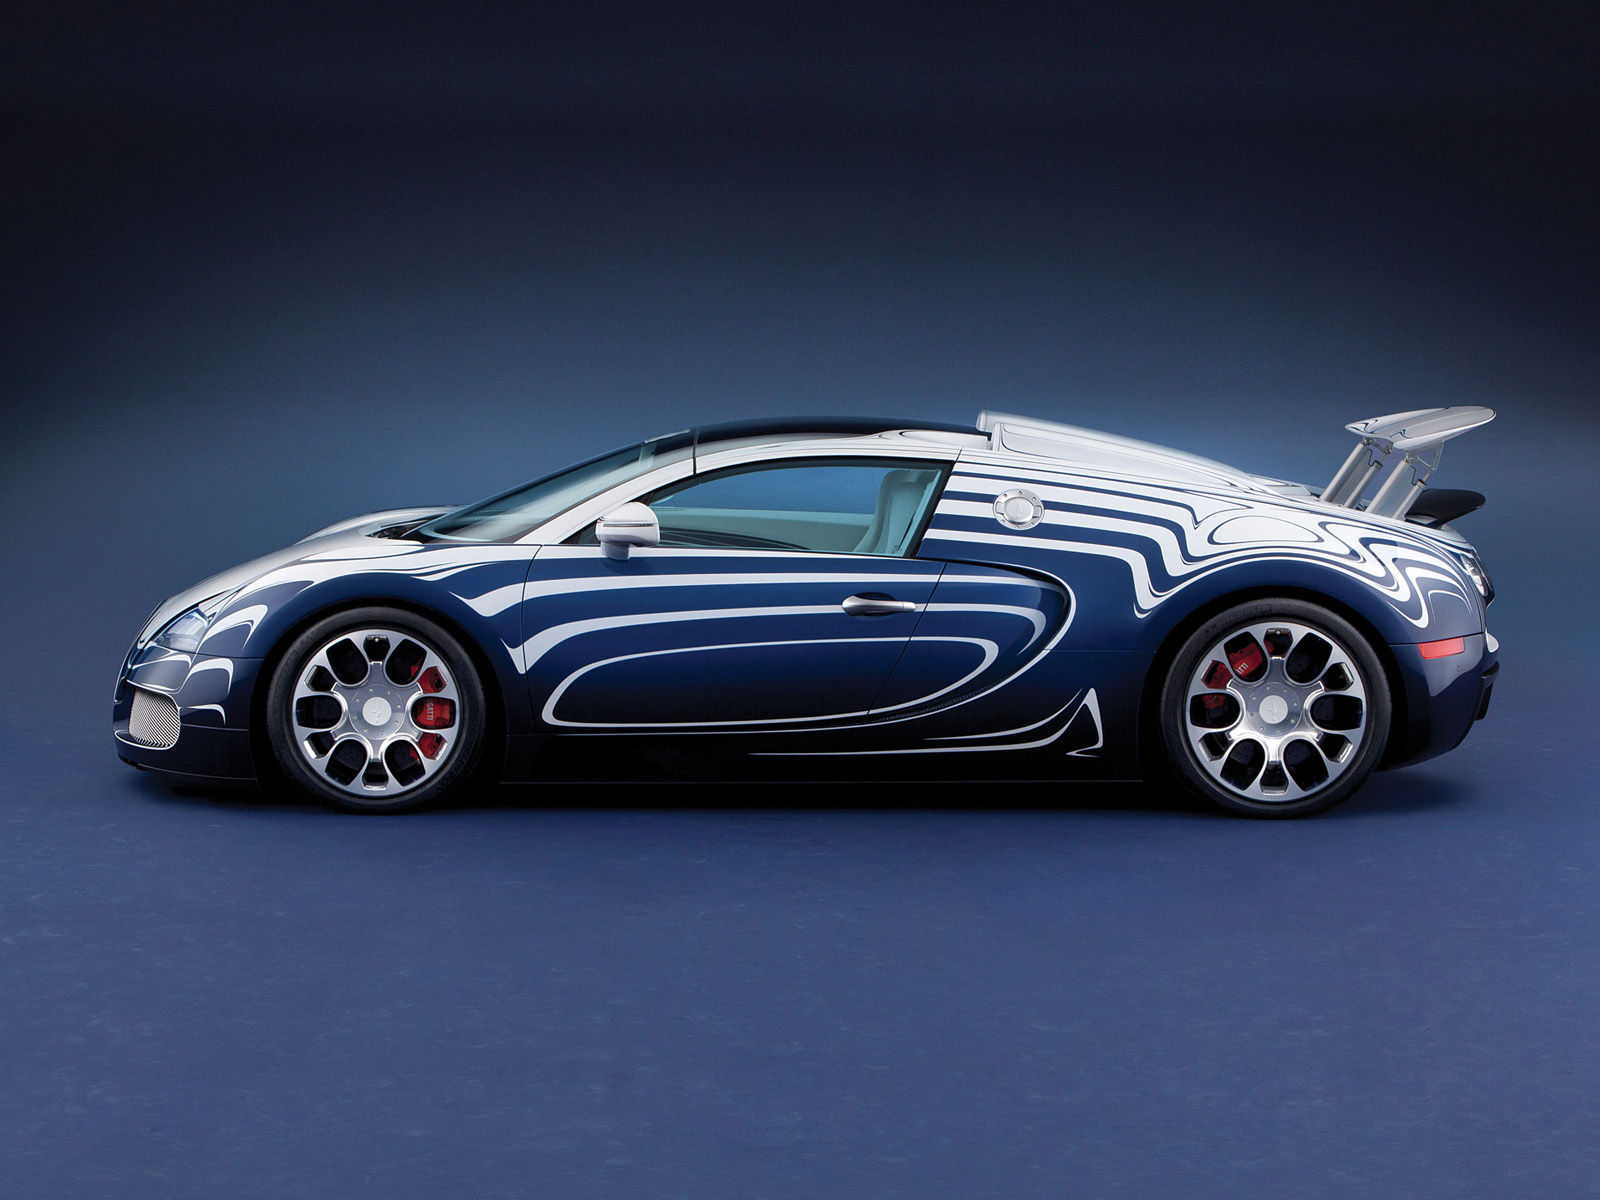 Скачать обои Bugatti Veyron Гранд Спорт Л'ор Блан на телефон бесплатно